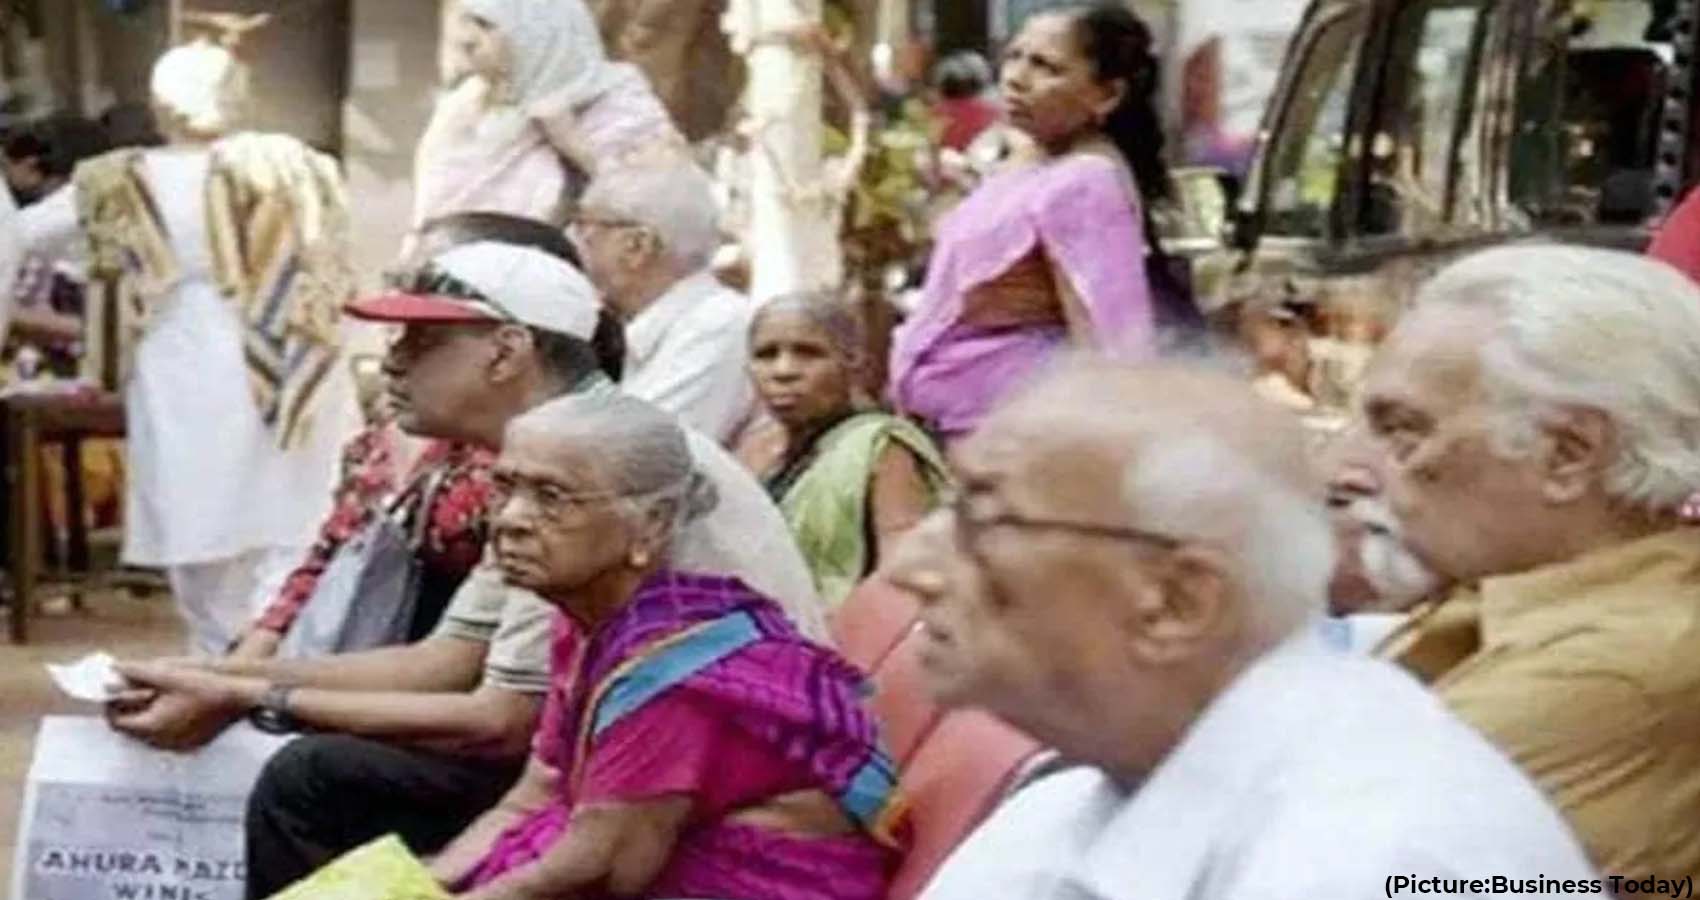 Life Expectancy in India Rises But Disparities Remain